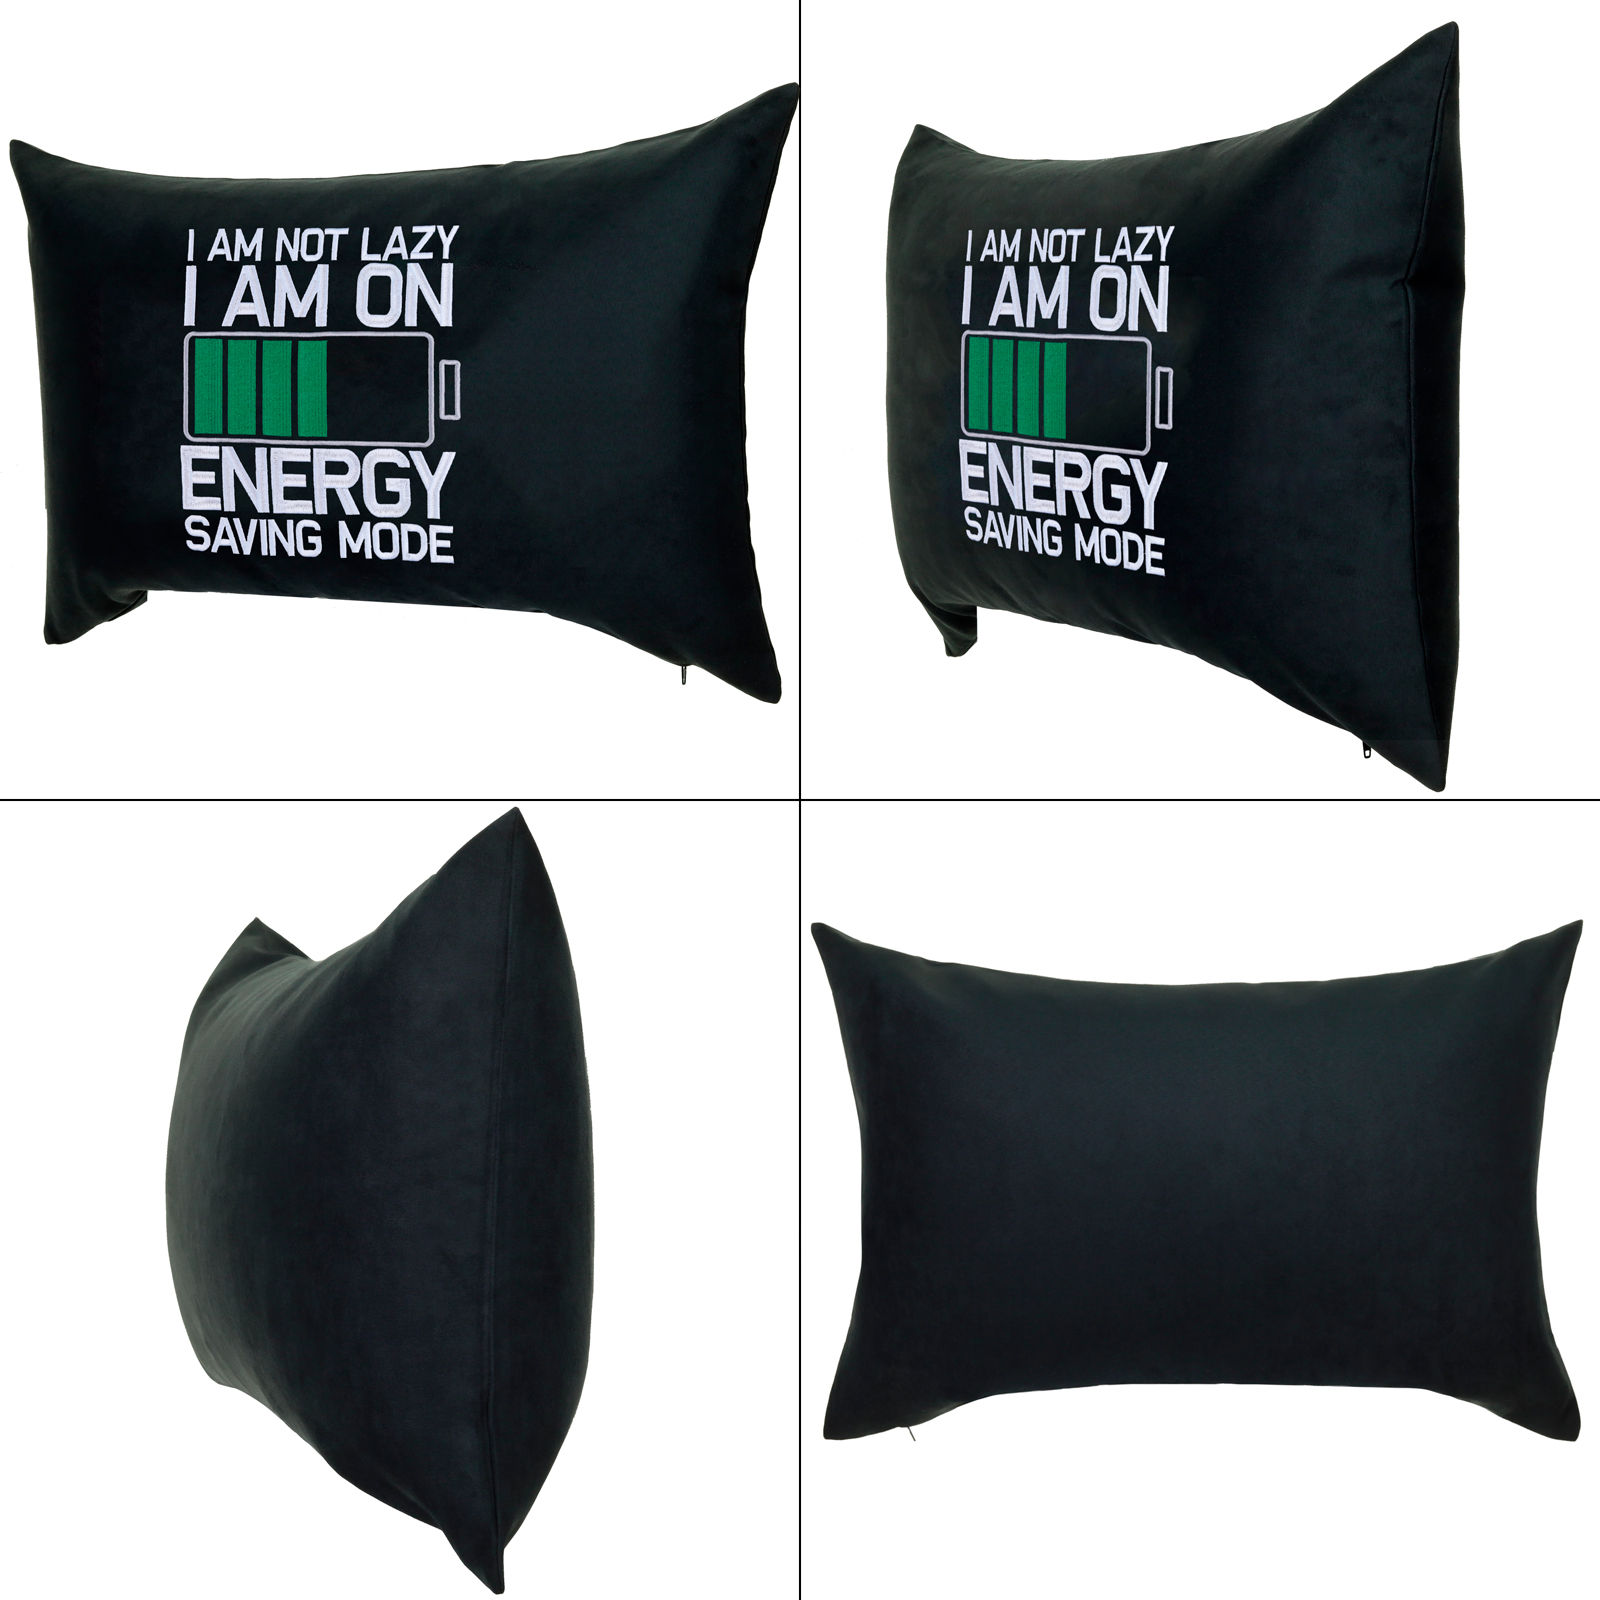 I am on energy saving mode - Kissen